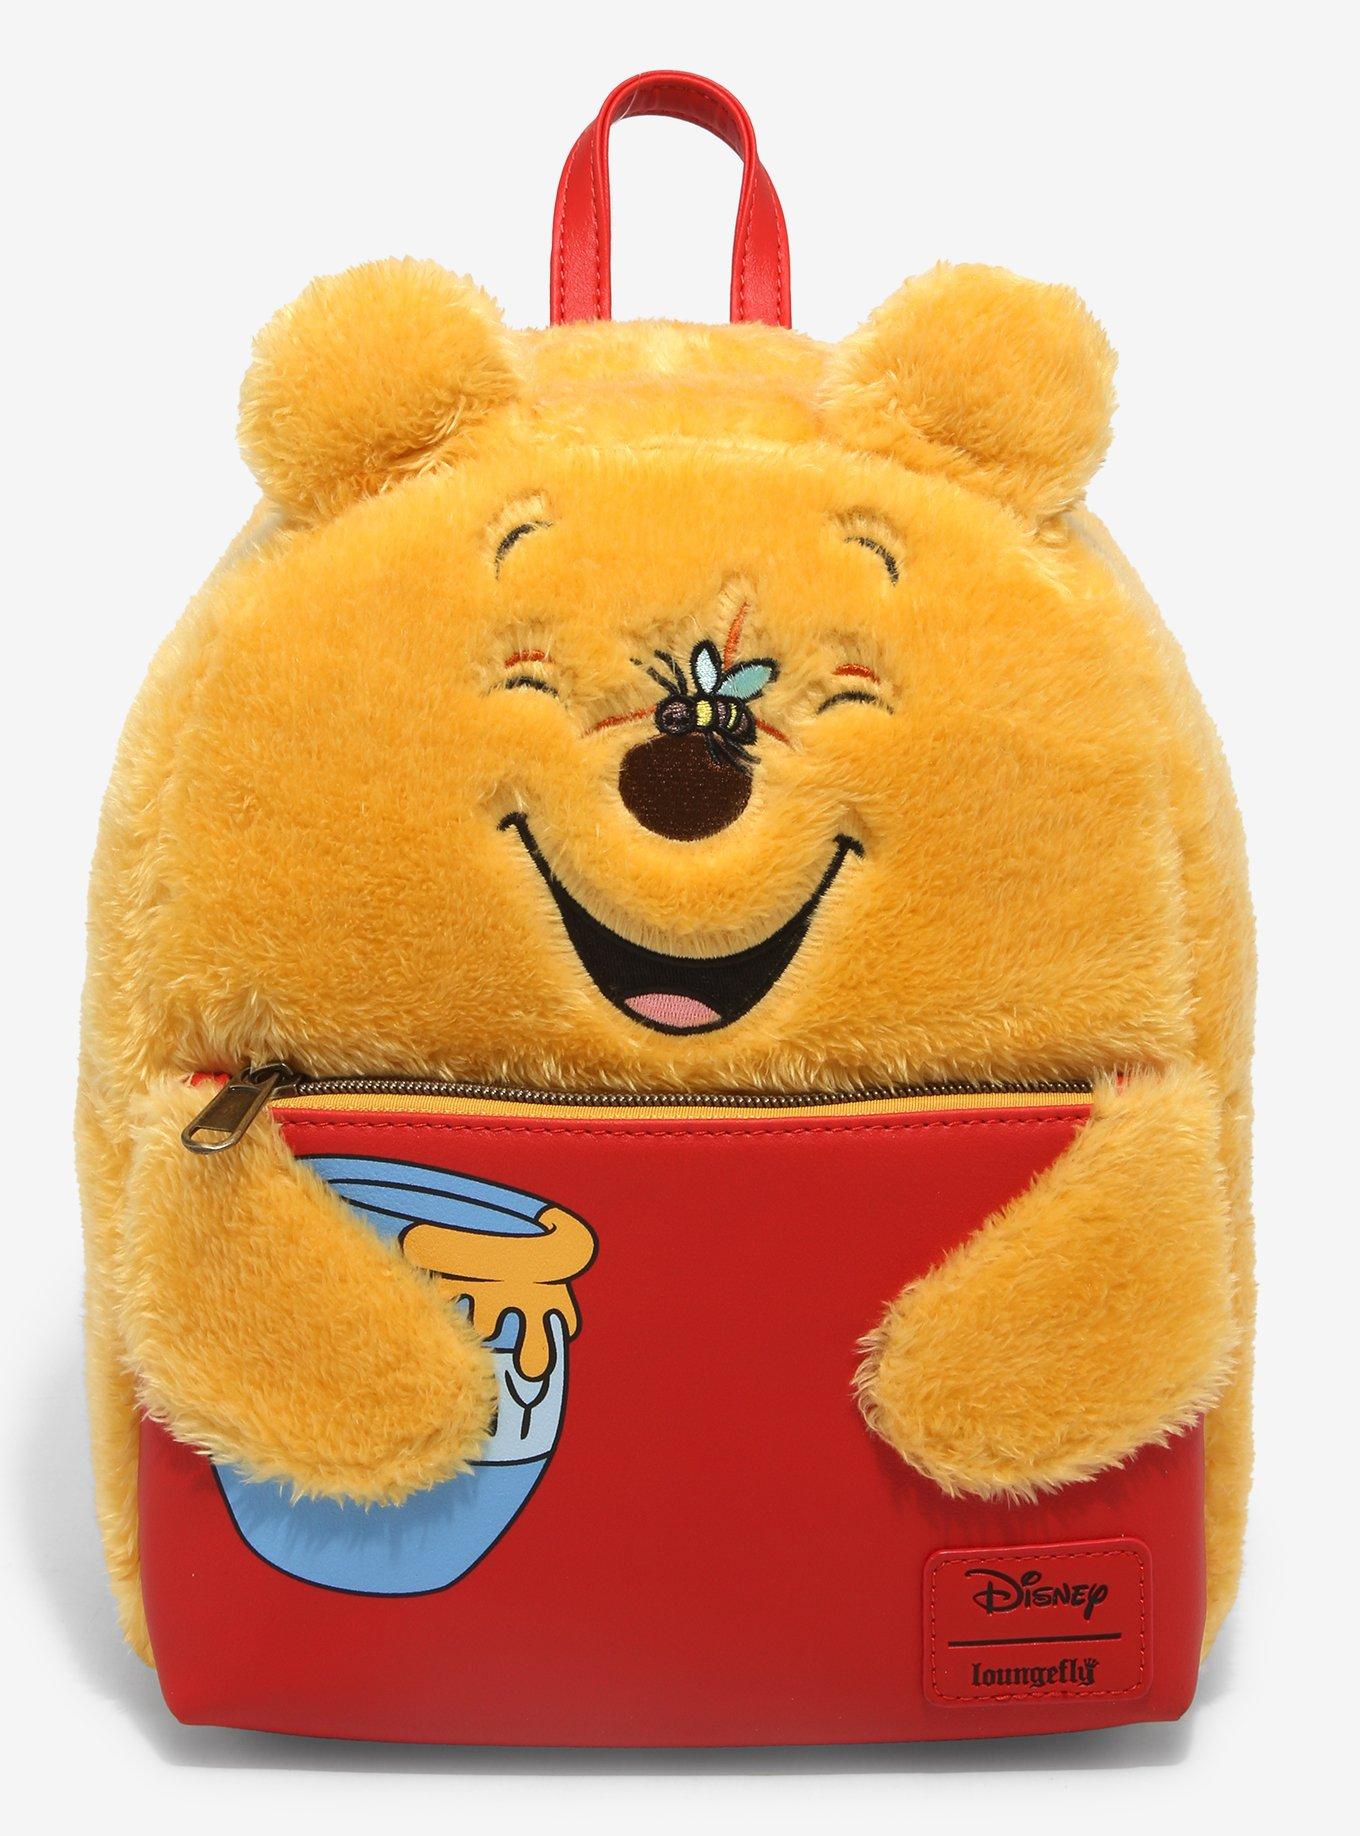 Disney Winnie The Pooh Kawaii Pooh Bear Honeypot Stuffed Plush